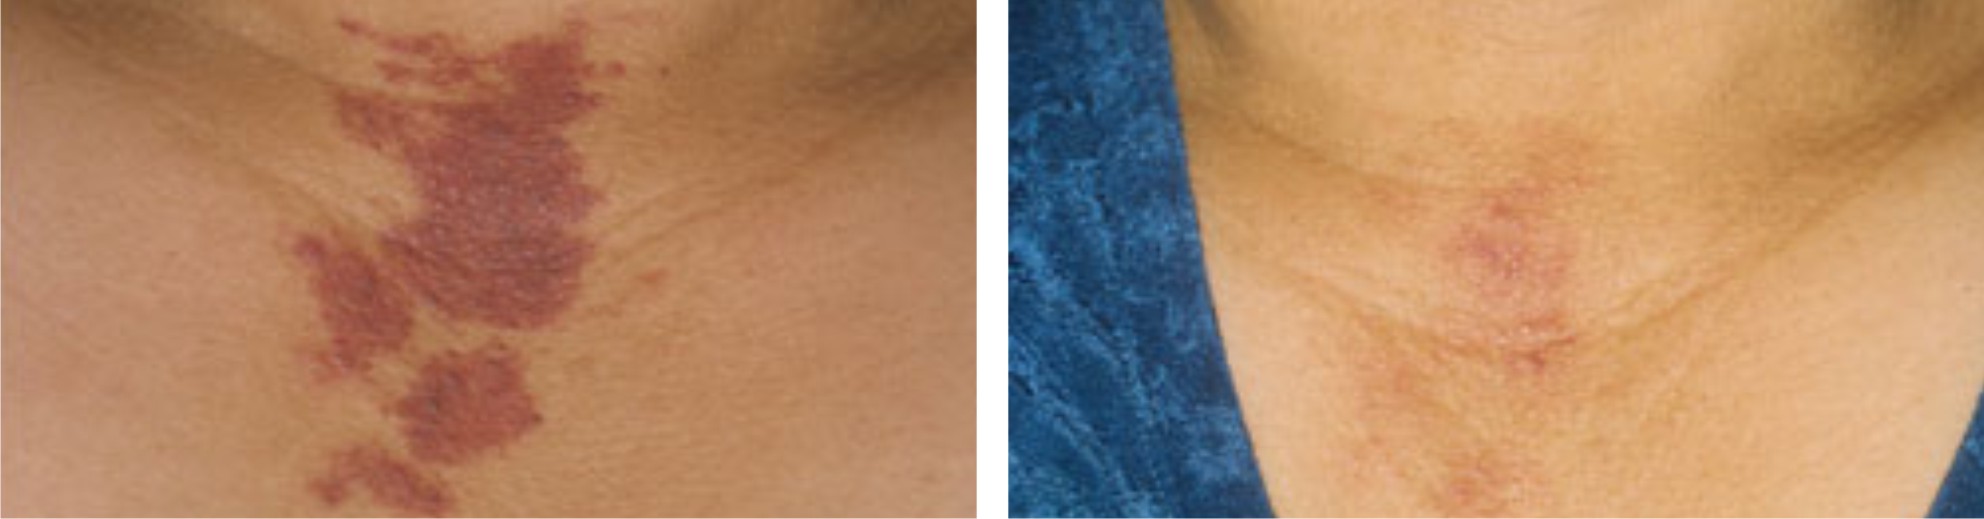 Laser Birthmark Removal Image Three